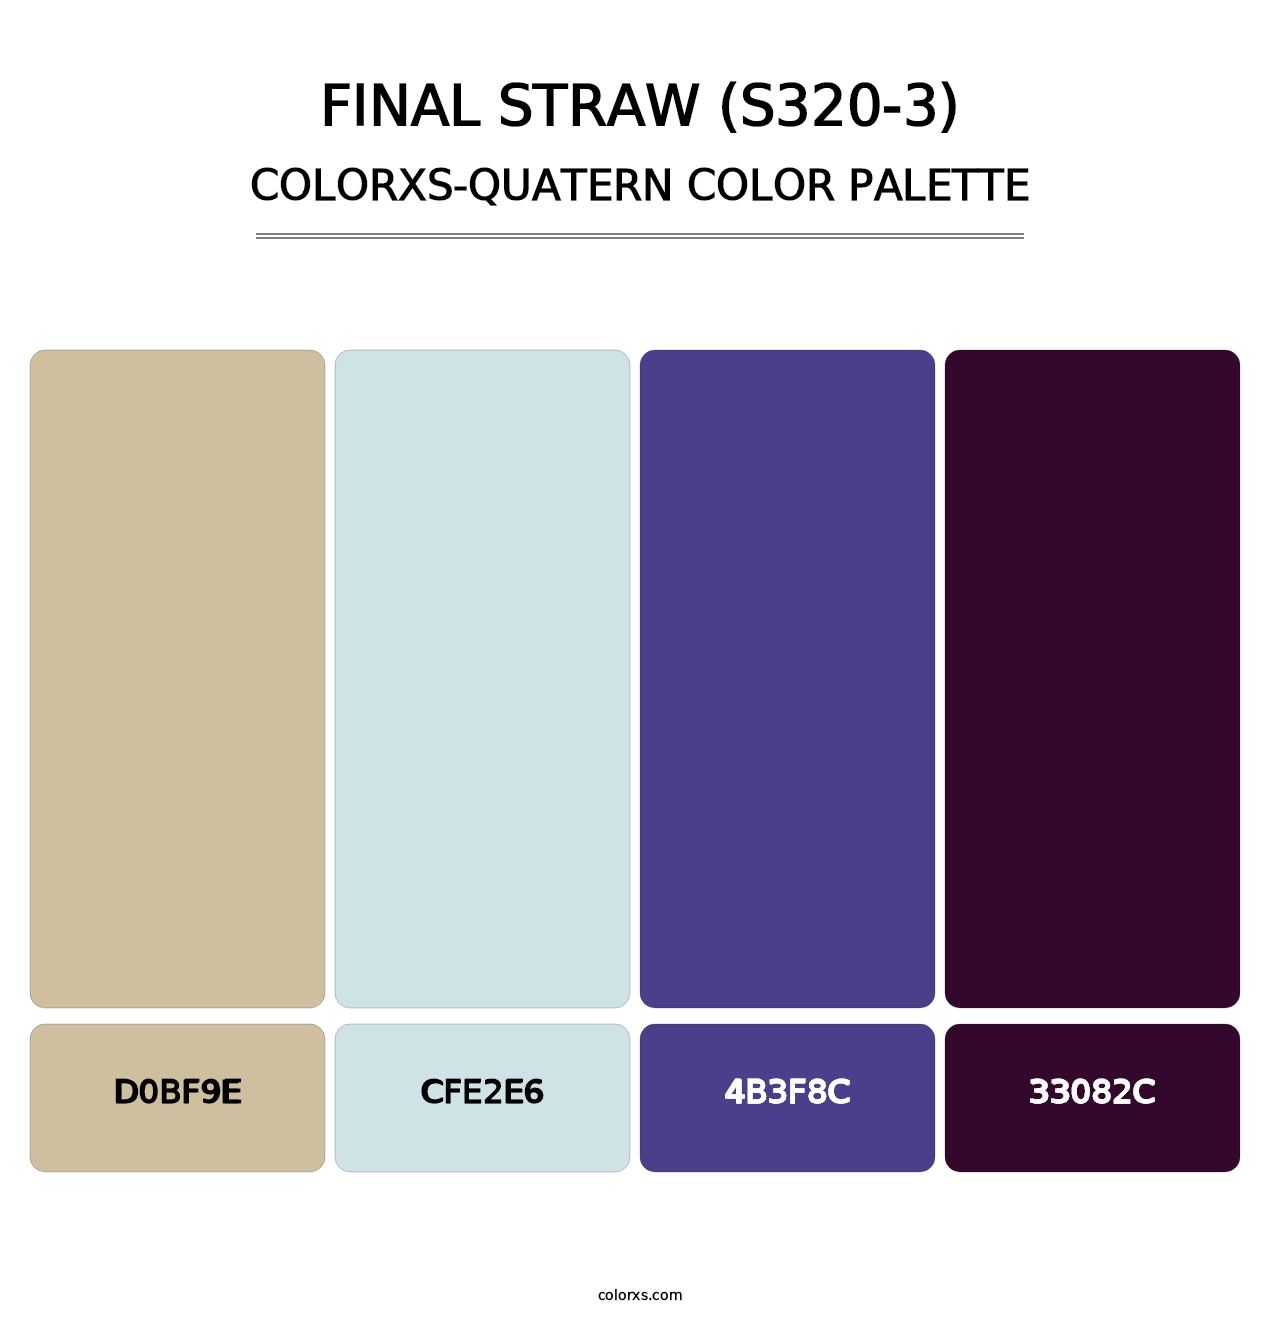 Final Straw (S320-3) - Colorxs Quatern Palette